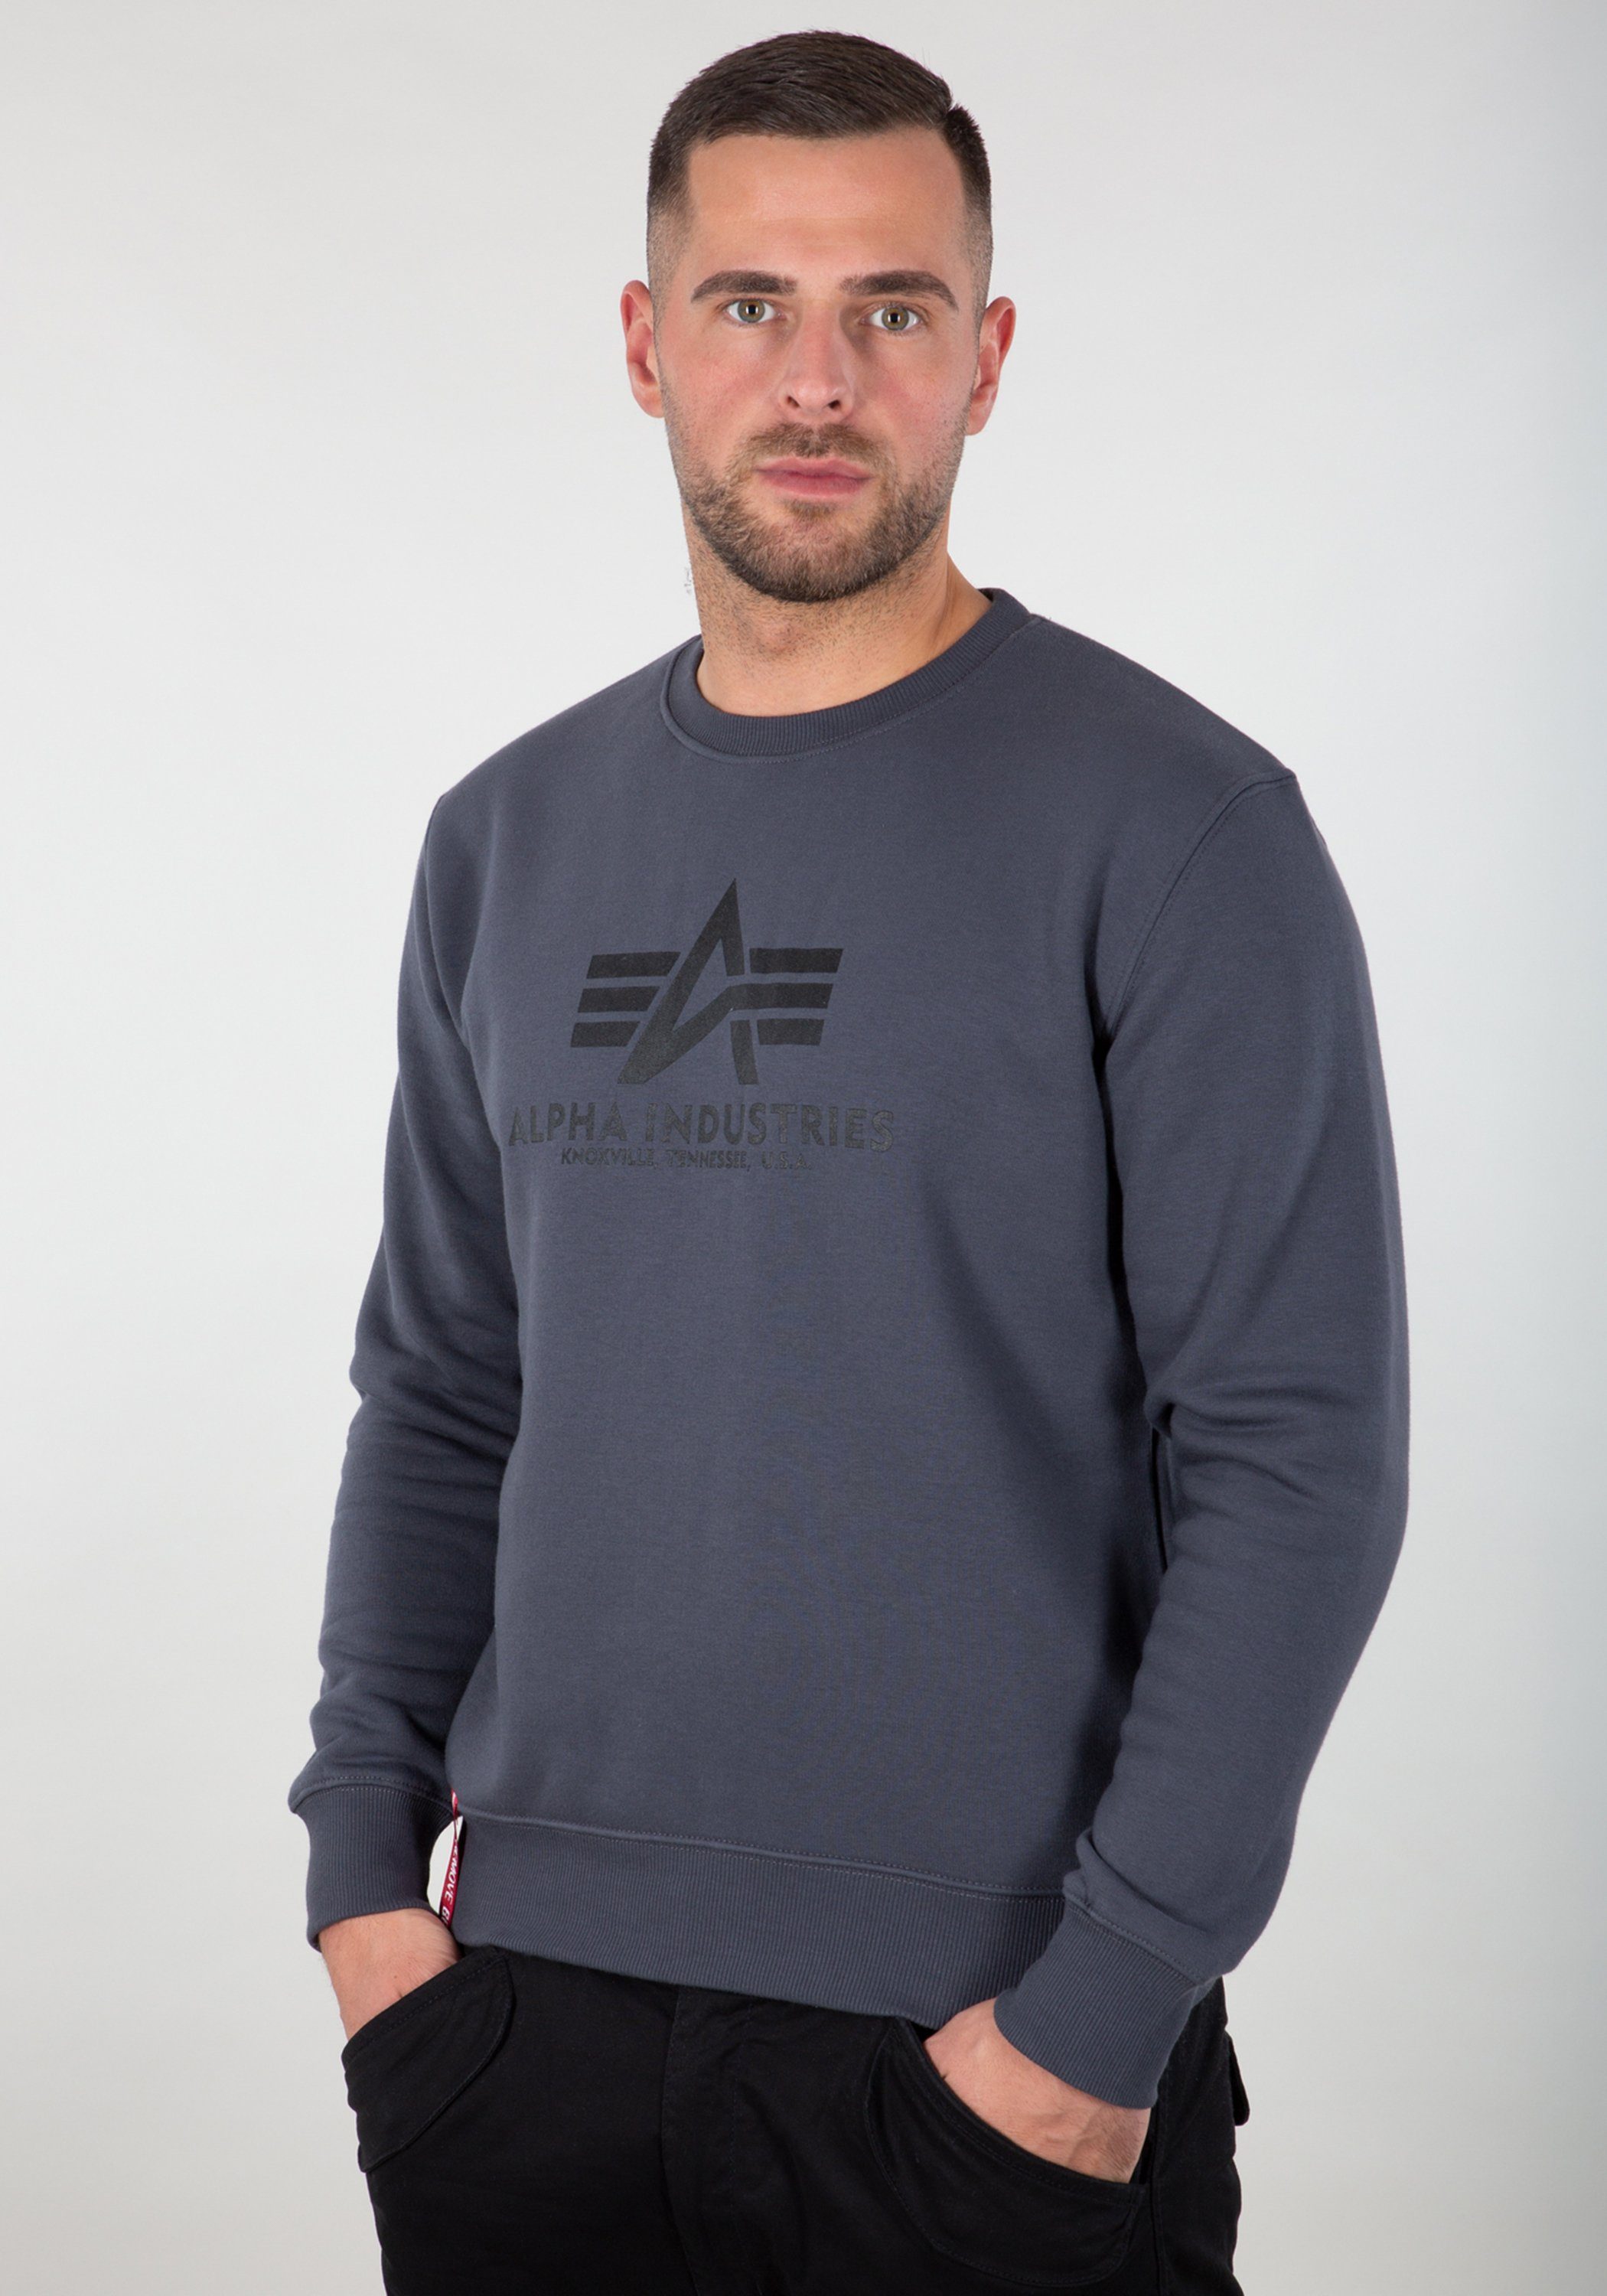 Alpha Sweatshirts Alpha Sweater - Basic greyblack/black Sweater Industries Industries Men